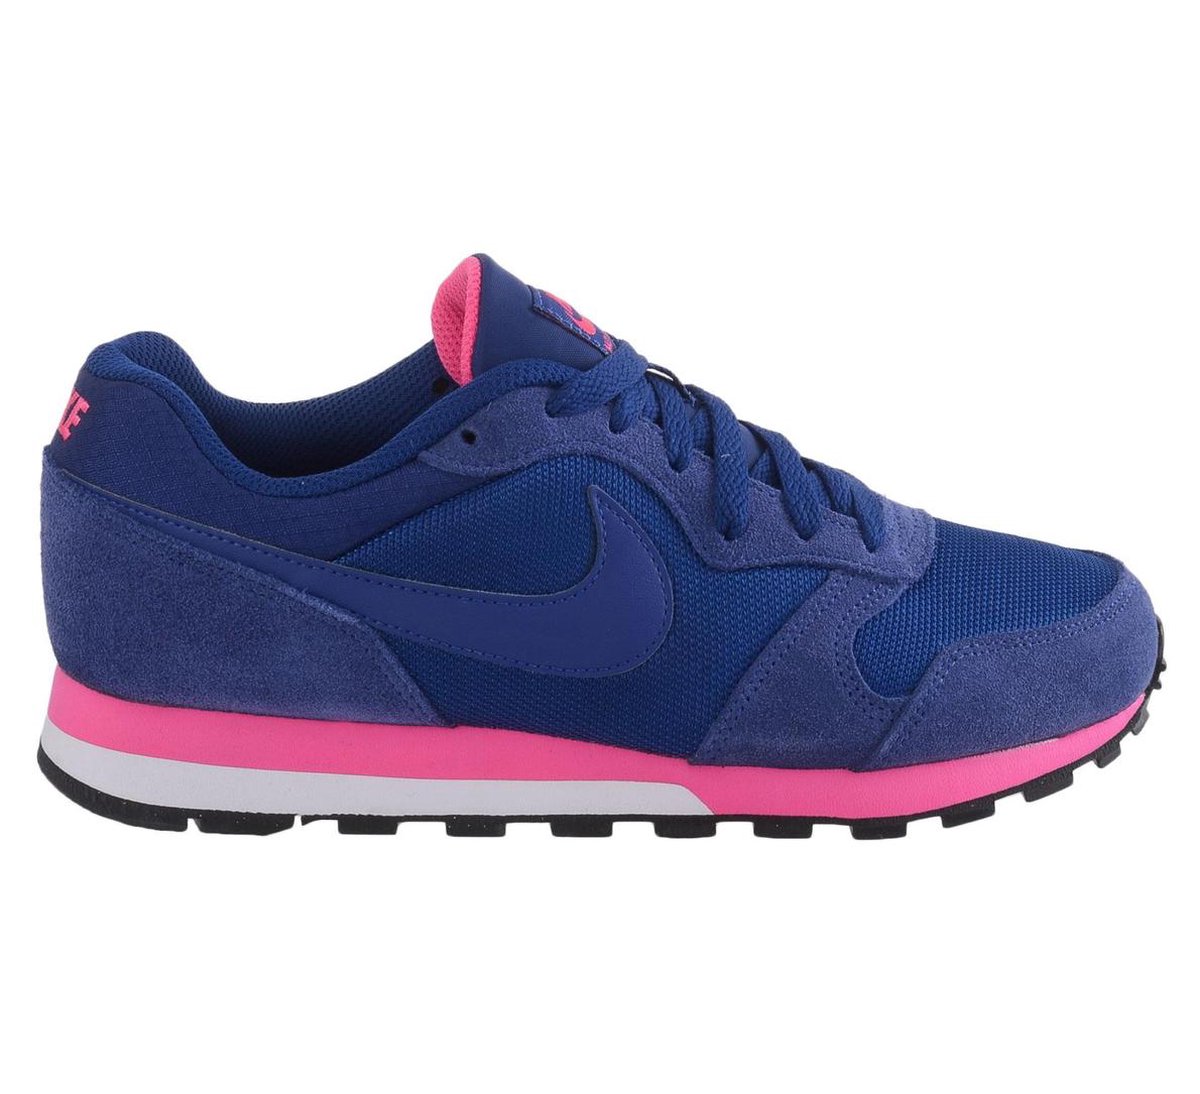 verbanning lucht rol Nike MD Runner 2 - Sneakers - Dames - Blauw/Roze - Maat 37.5 | bol.com